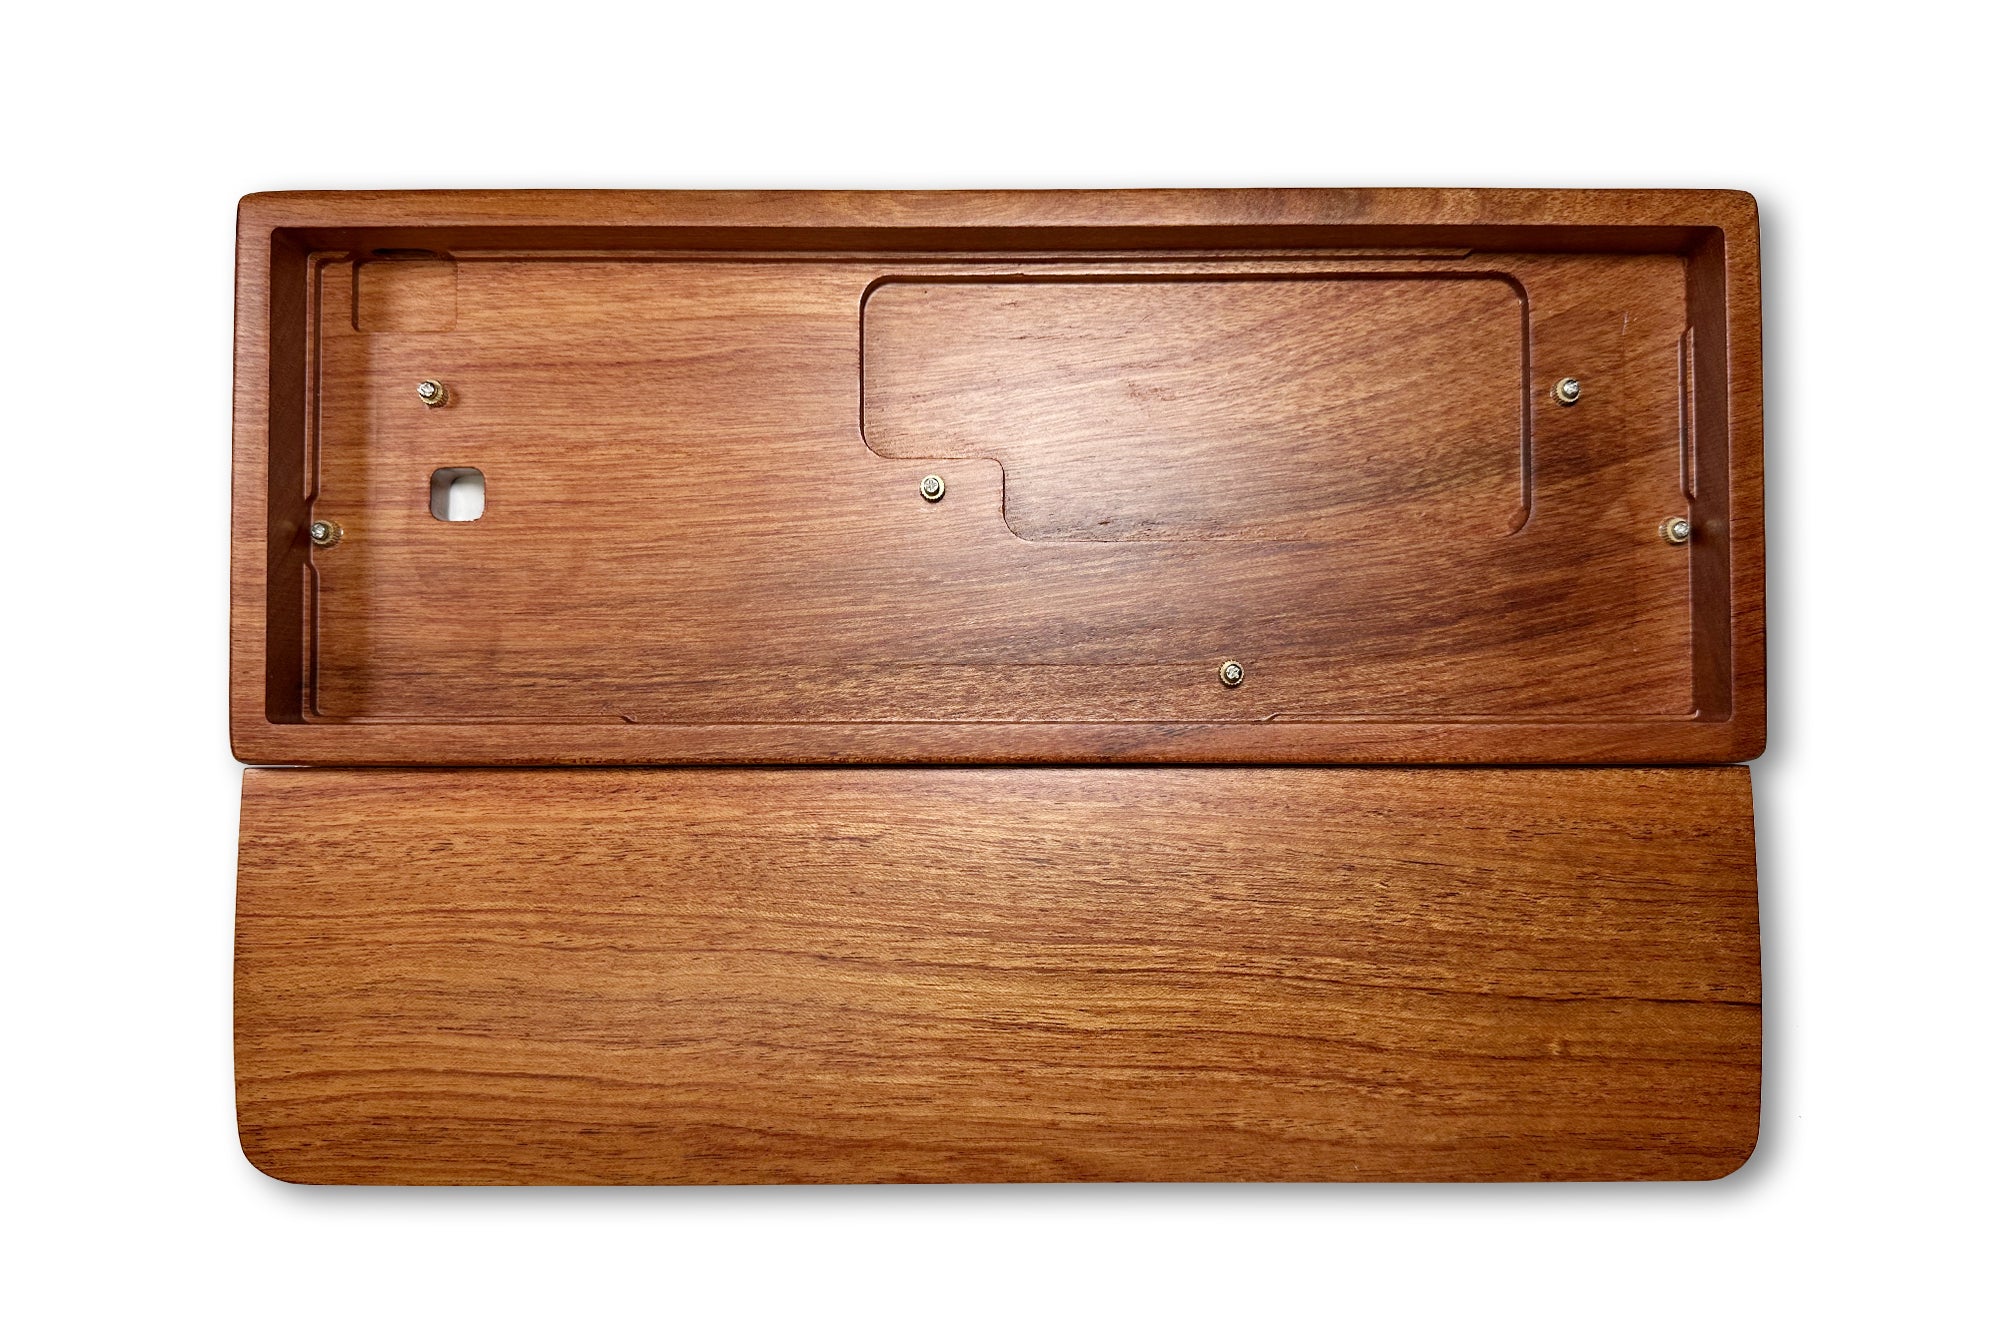 KBDFans GH60 Wooden Keyboard Case and Wrist Rest